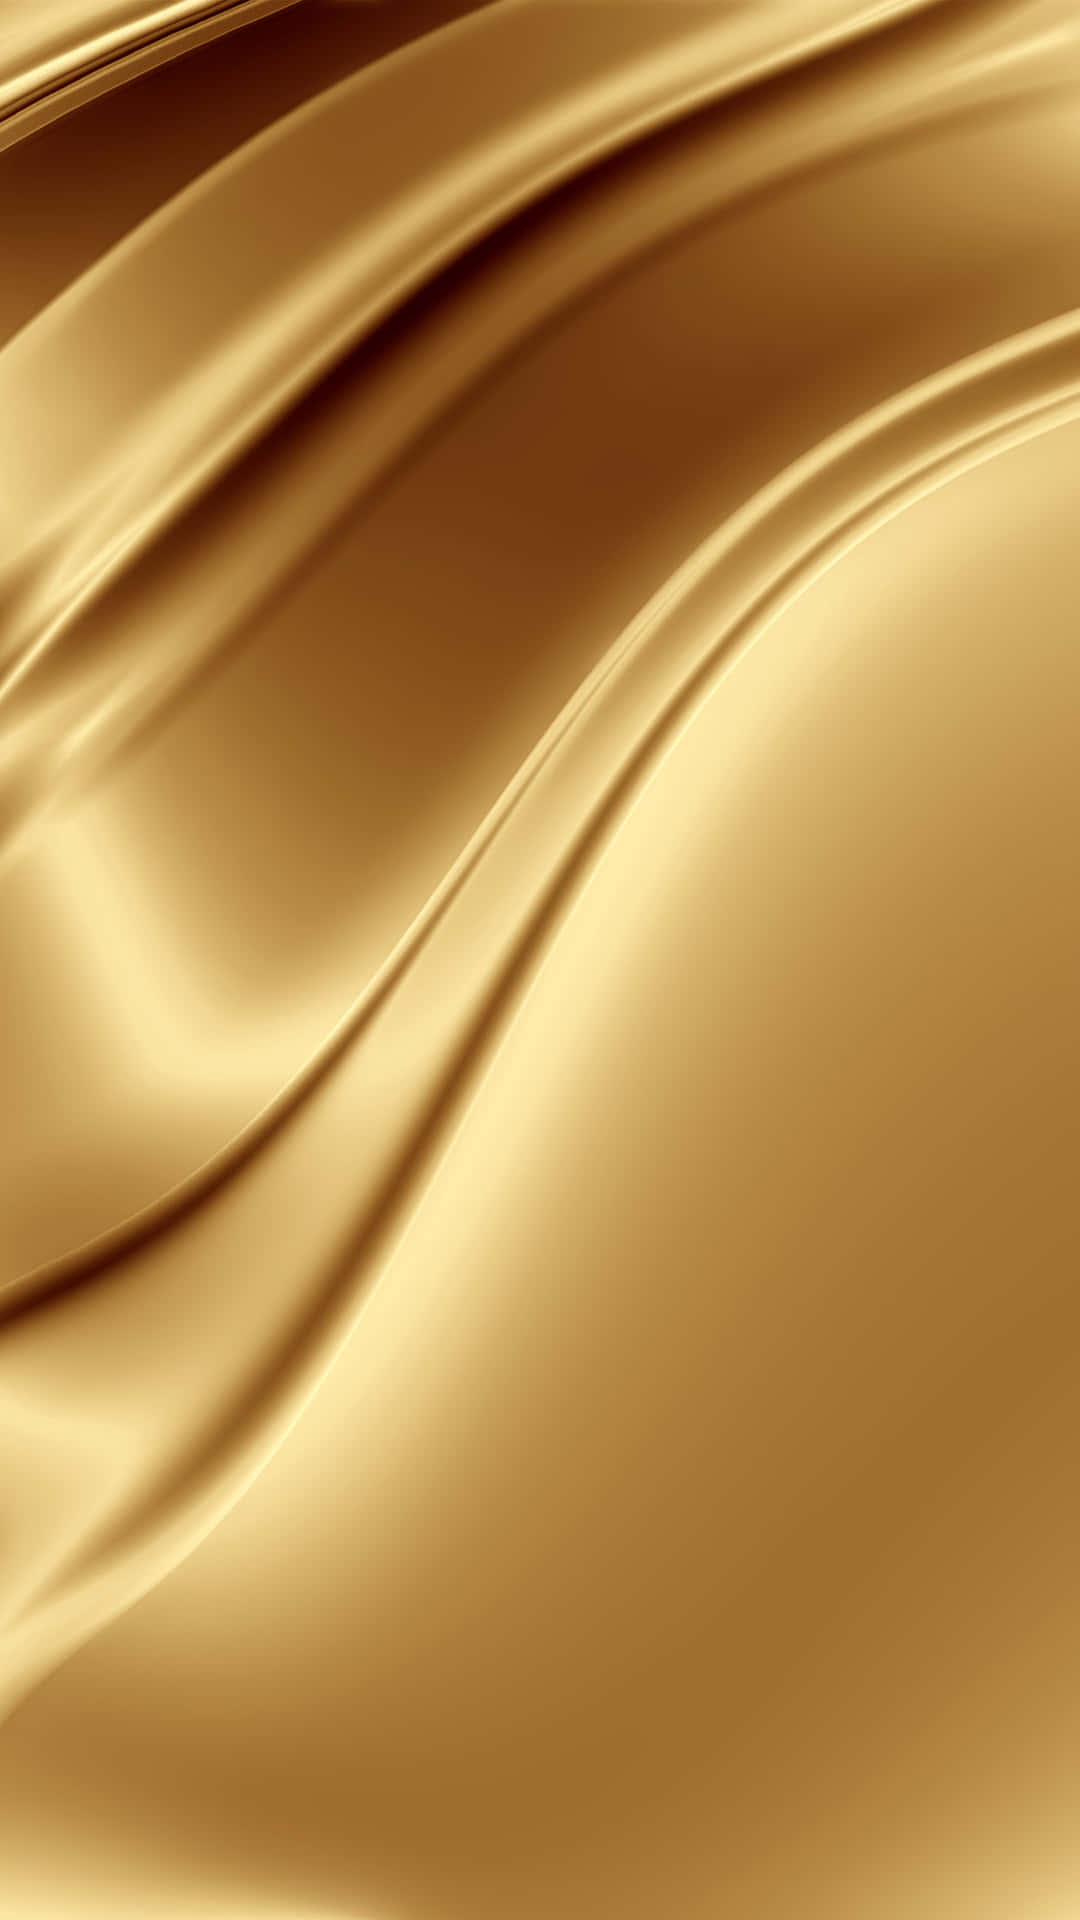 Gold Iphone Liquid Metal Texture Background